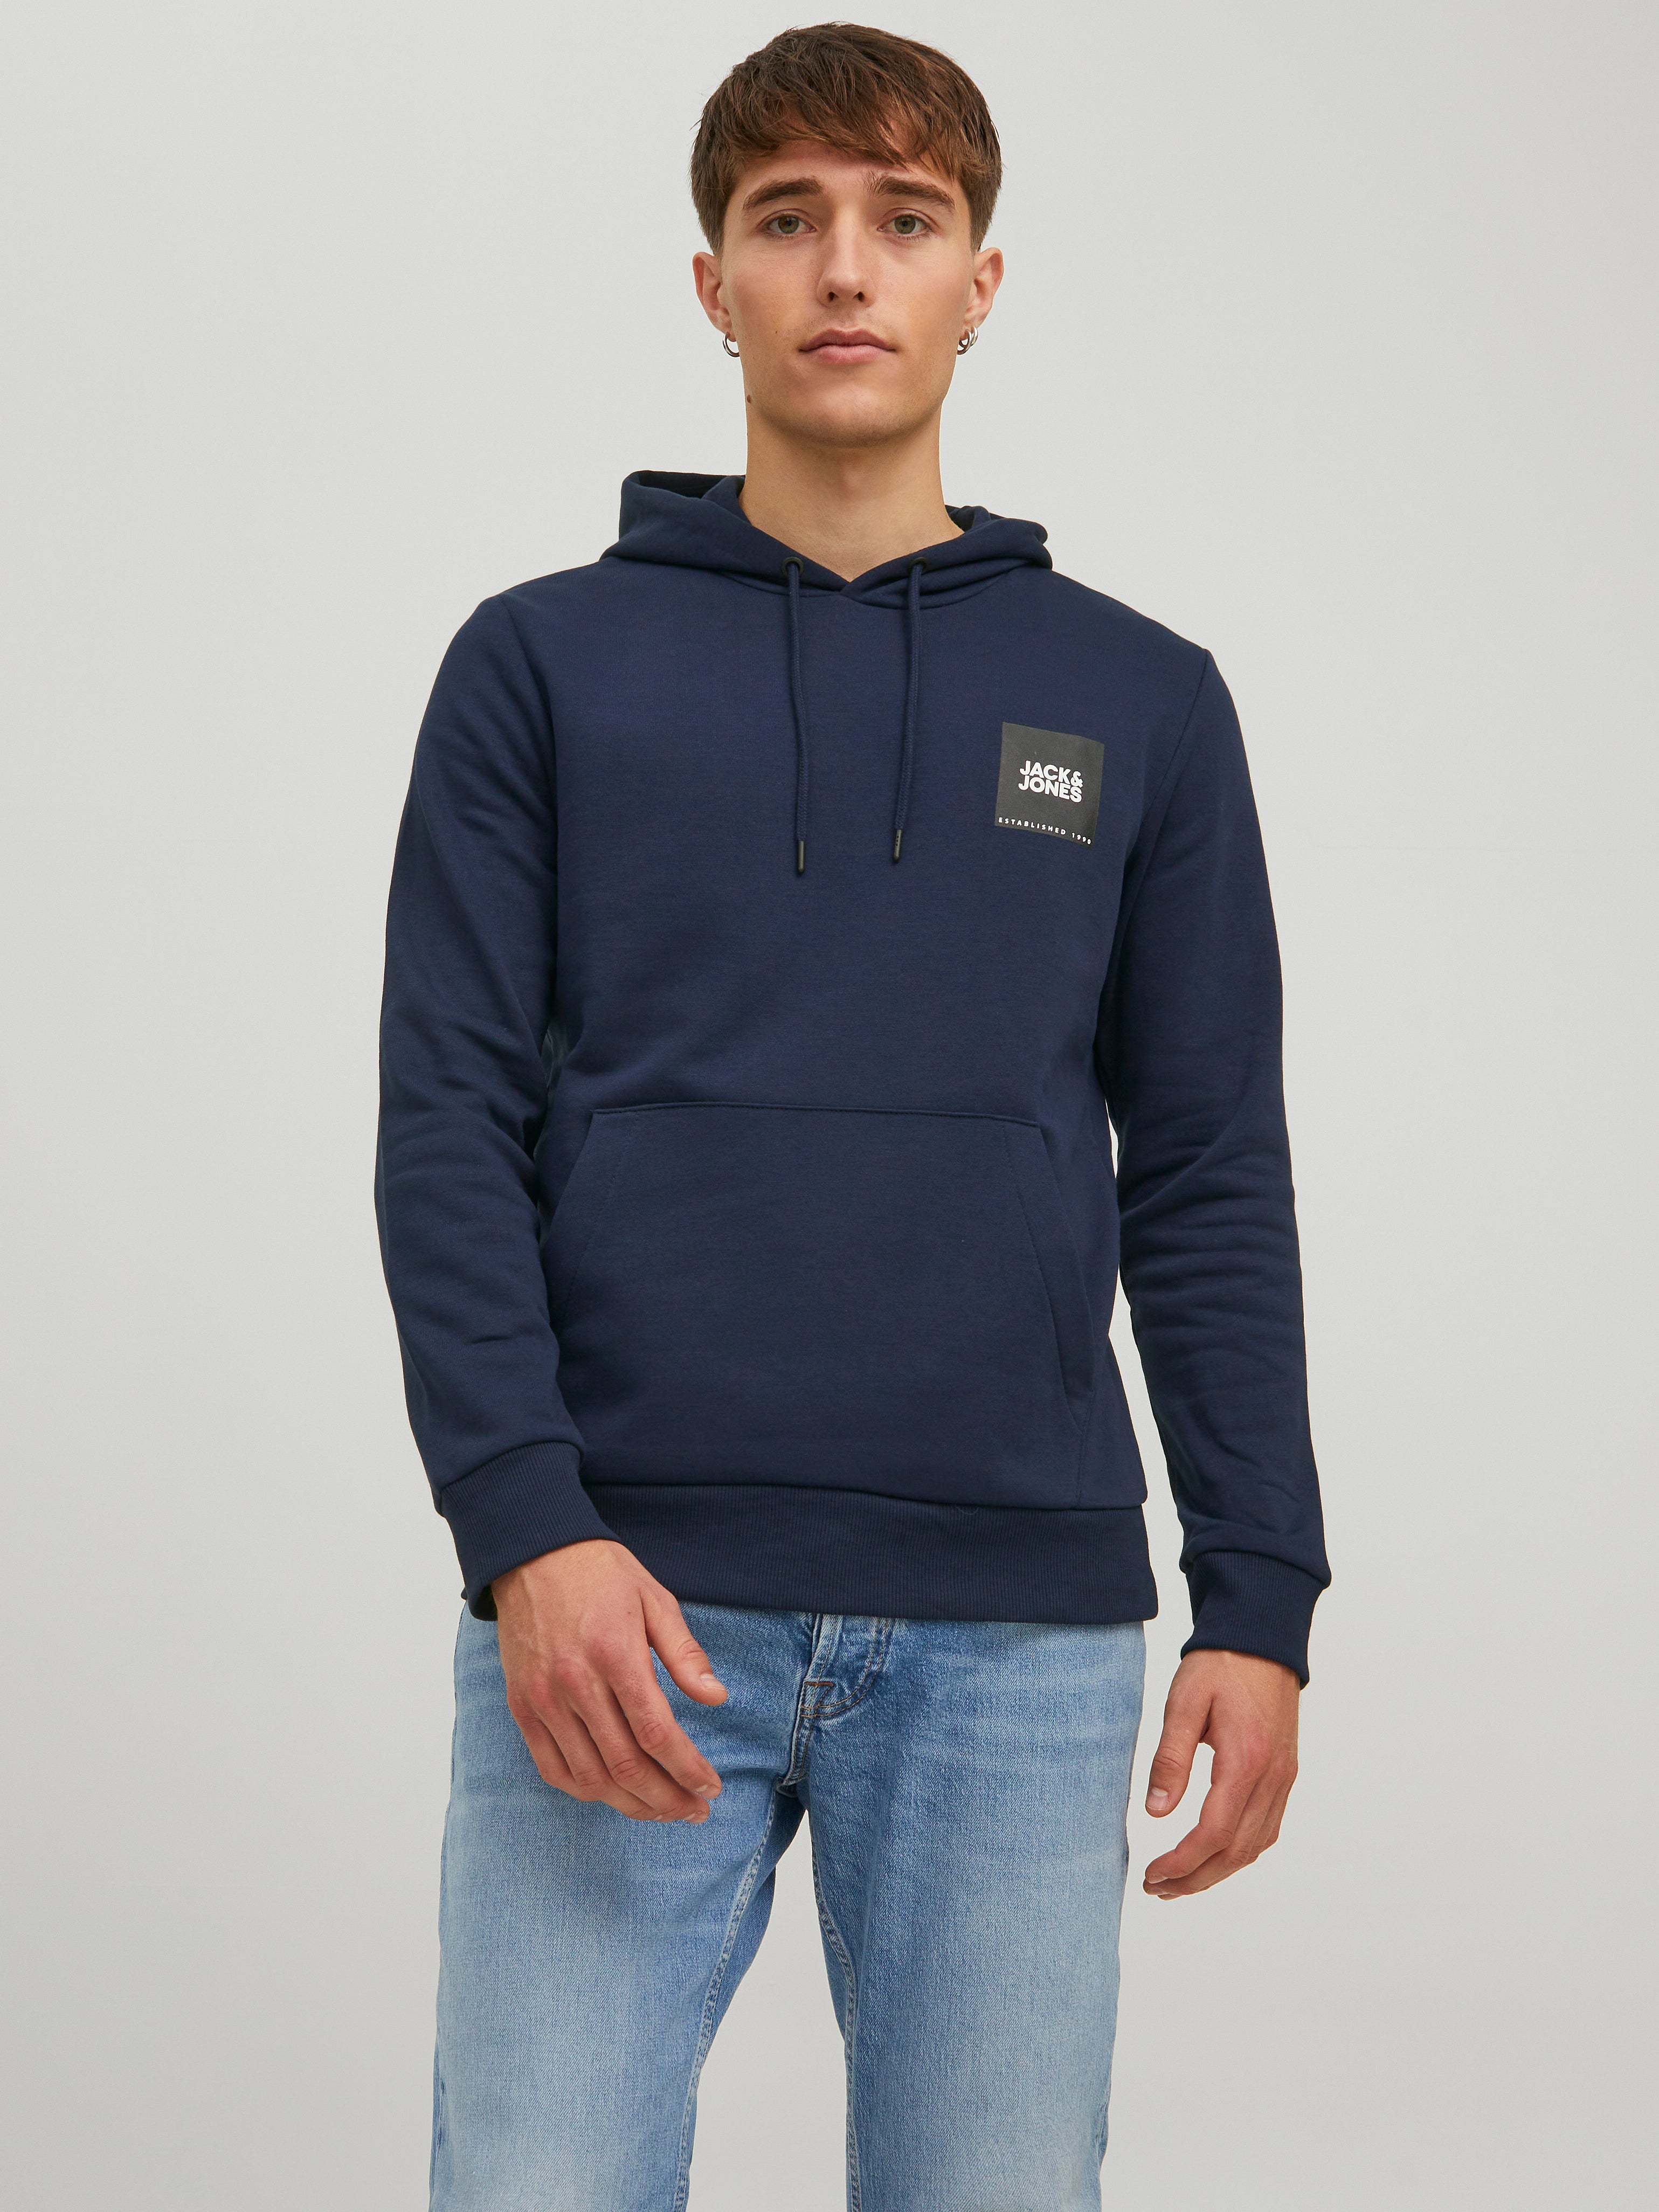 MEN FASHION Jumpers & Sweatshirts Hoodie Navy Blue XXL Jack & Jones sweatshirt discount 56% 